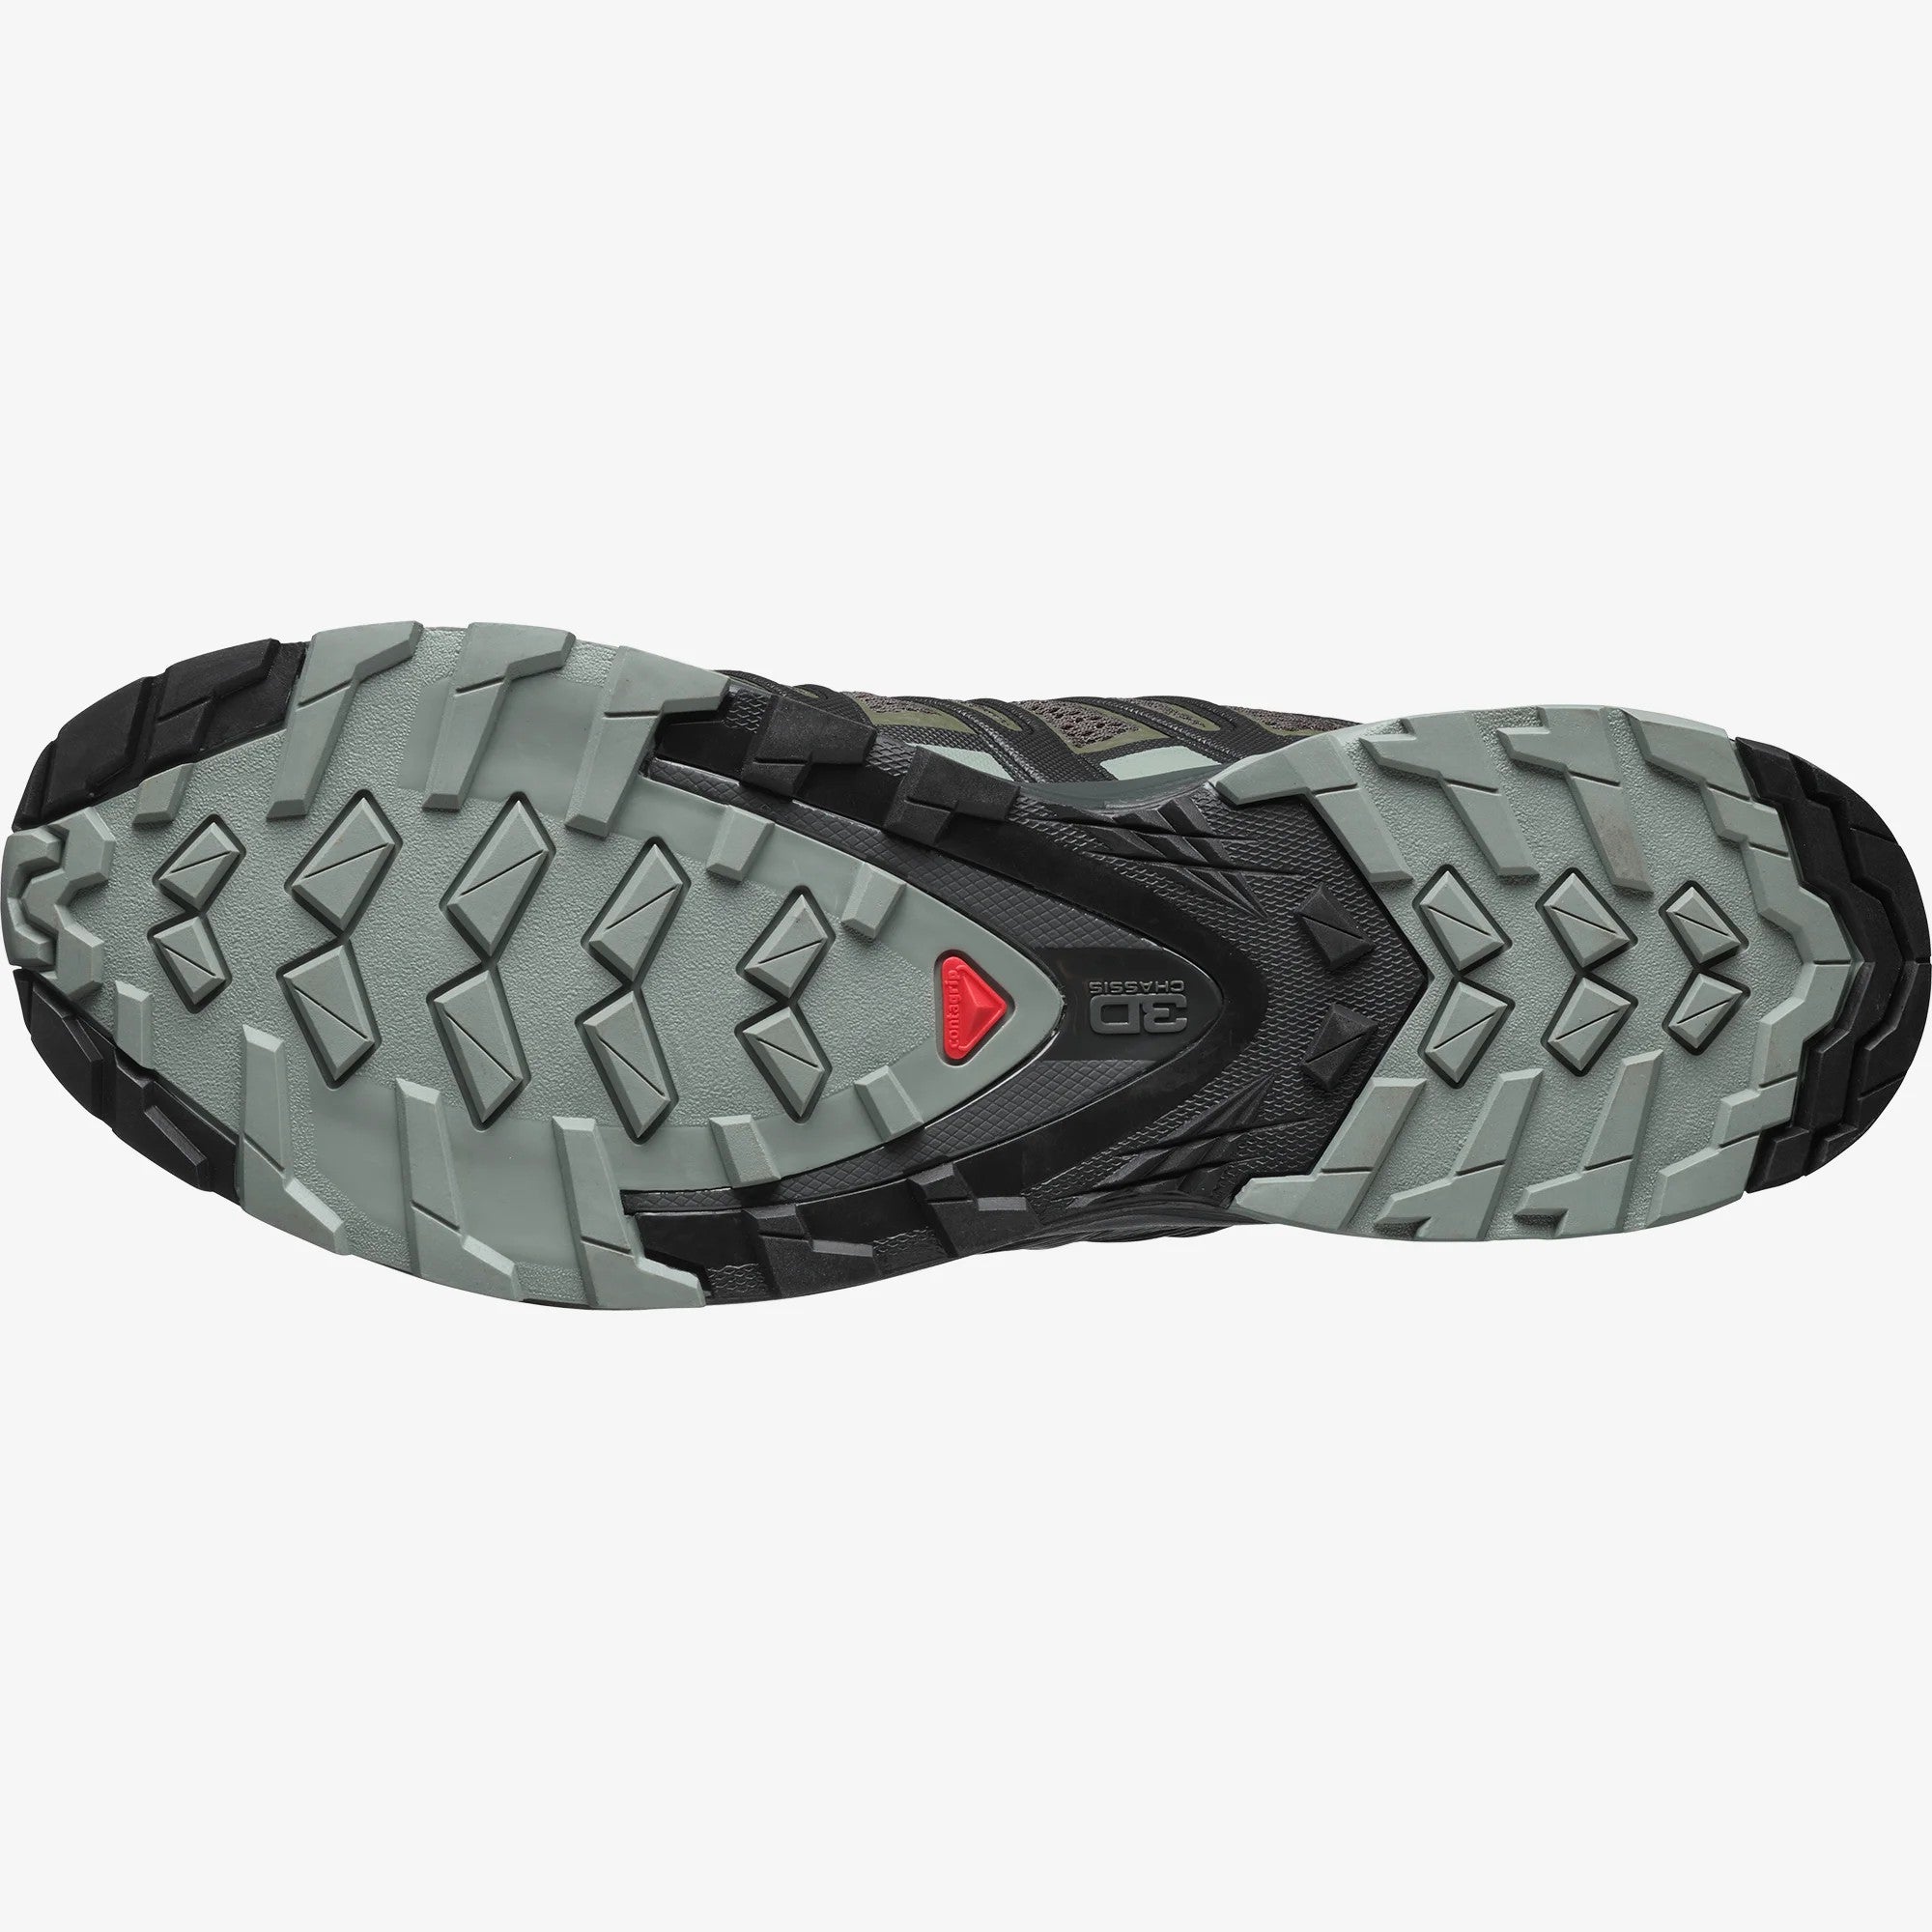 Salomon XA Pro 3D v8 Shoes - 88 Gear